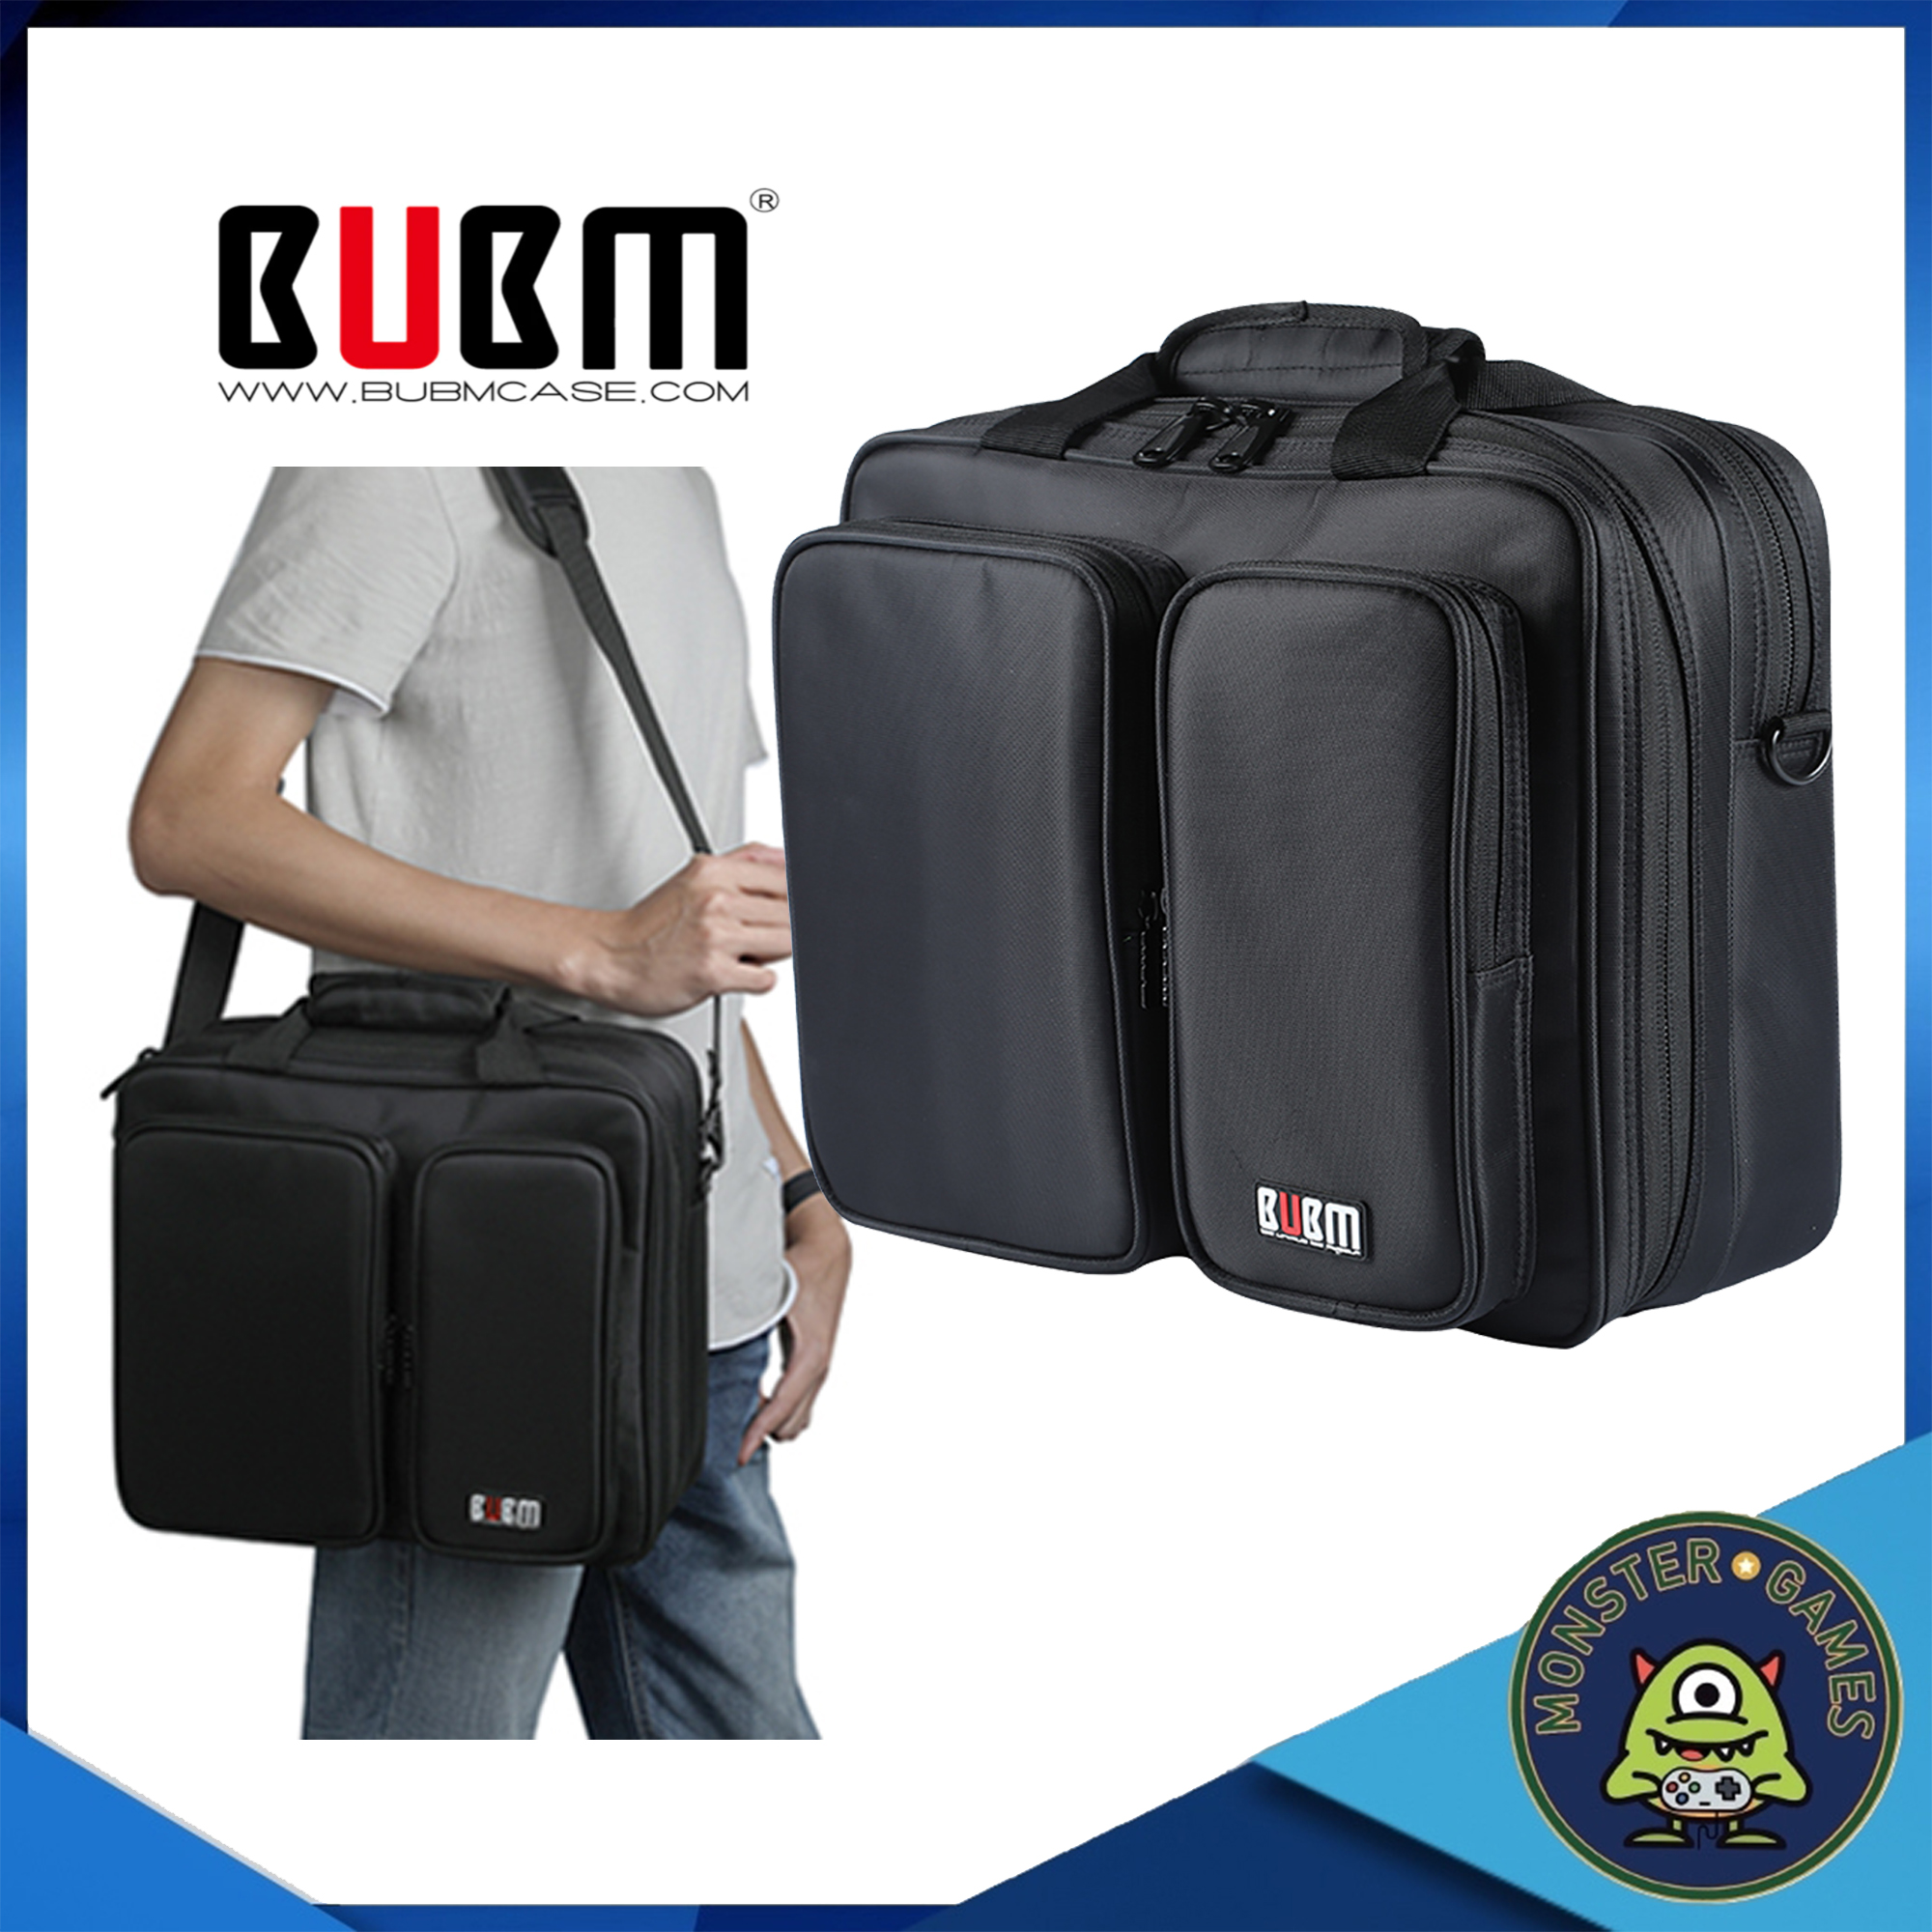 BUBM กระเป๋าสะพายข้าง Ps4 Slim ของแท้ (Ps.4 bag)(BUBM bag)(กระเป๋าBUBM Ps4)(กระเป๋า BUBM Travel Bag for PS4)